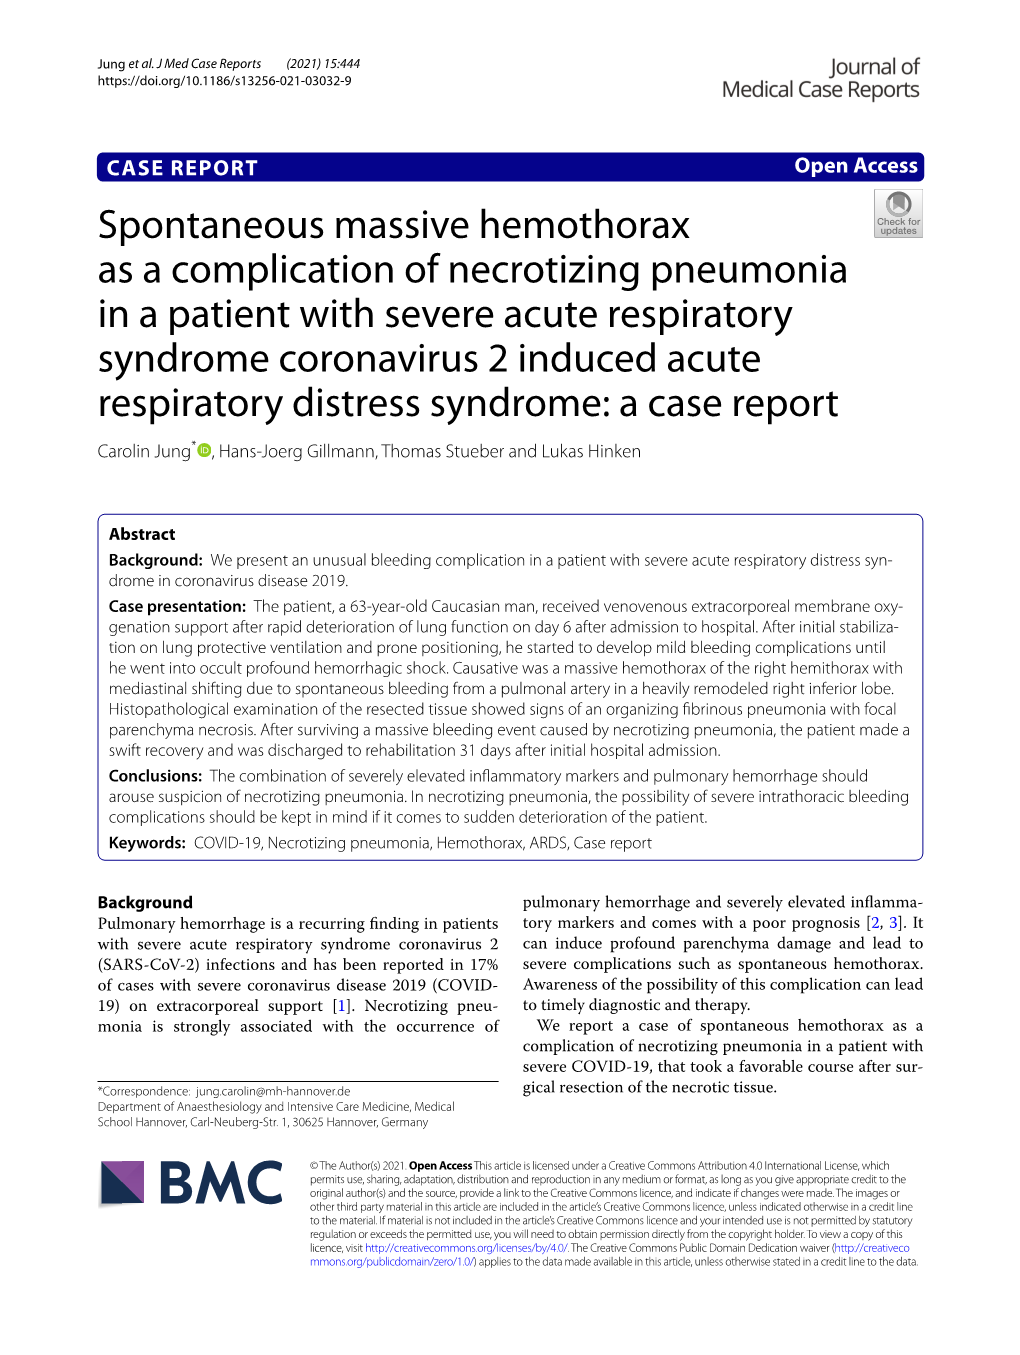 Spontaneous Massive Hemothorax As a Complication of Necrotizing